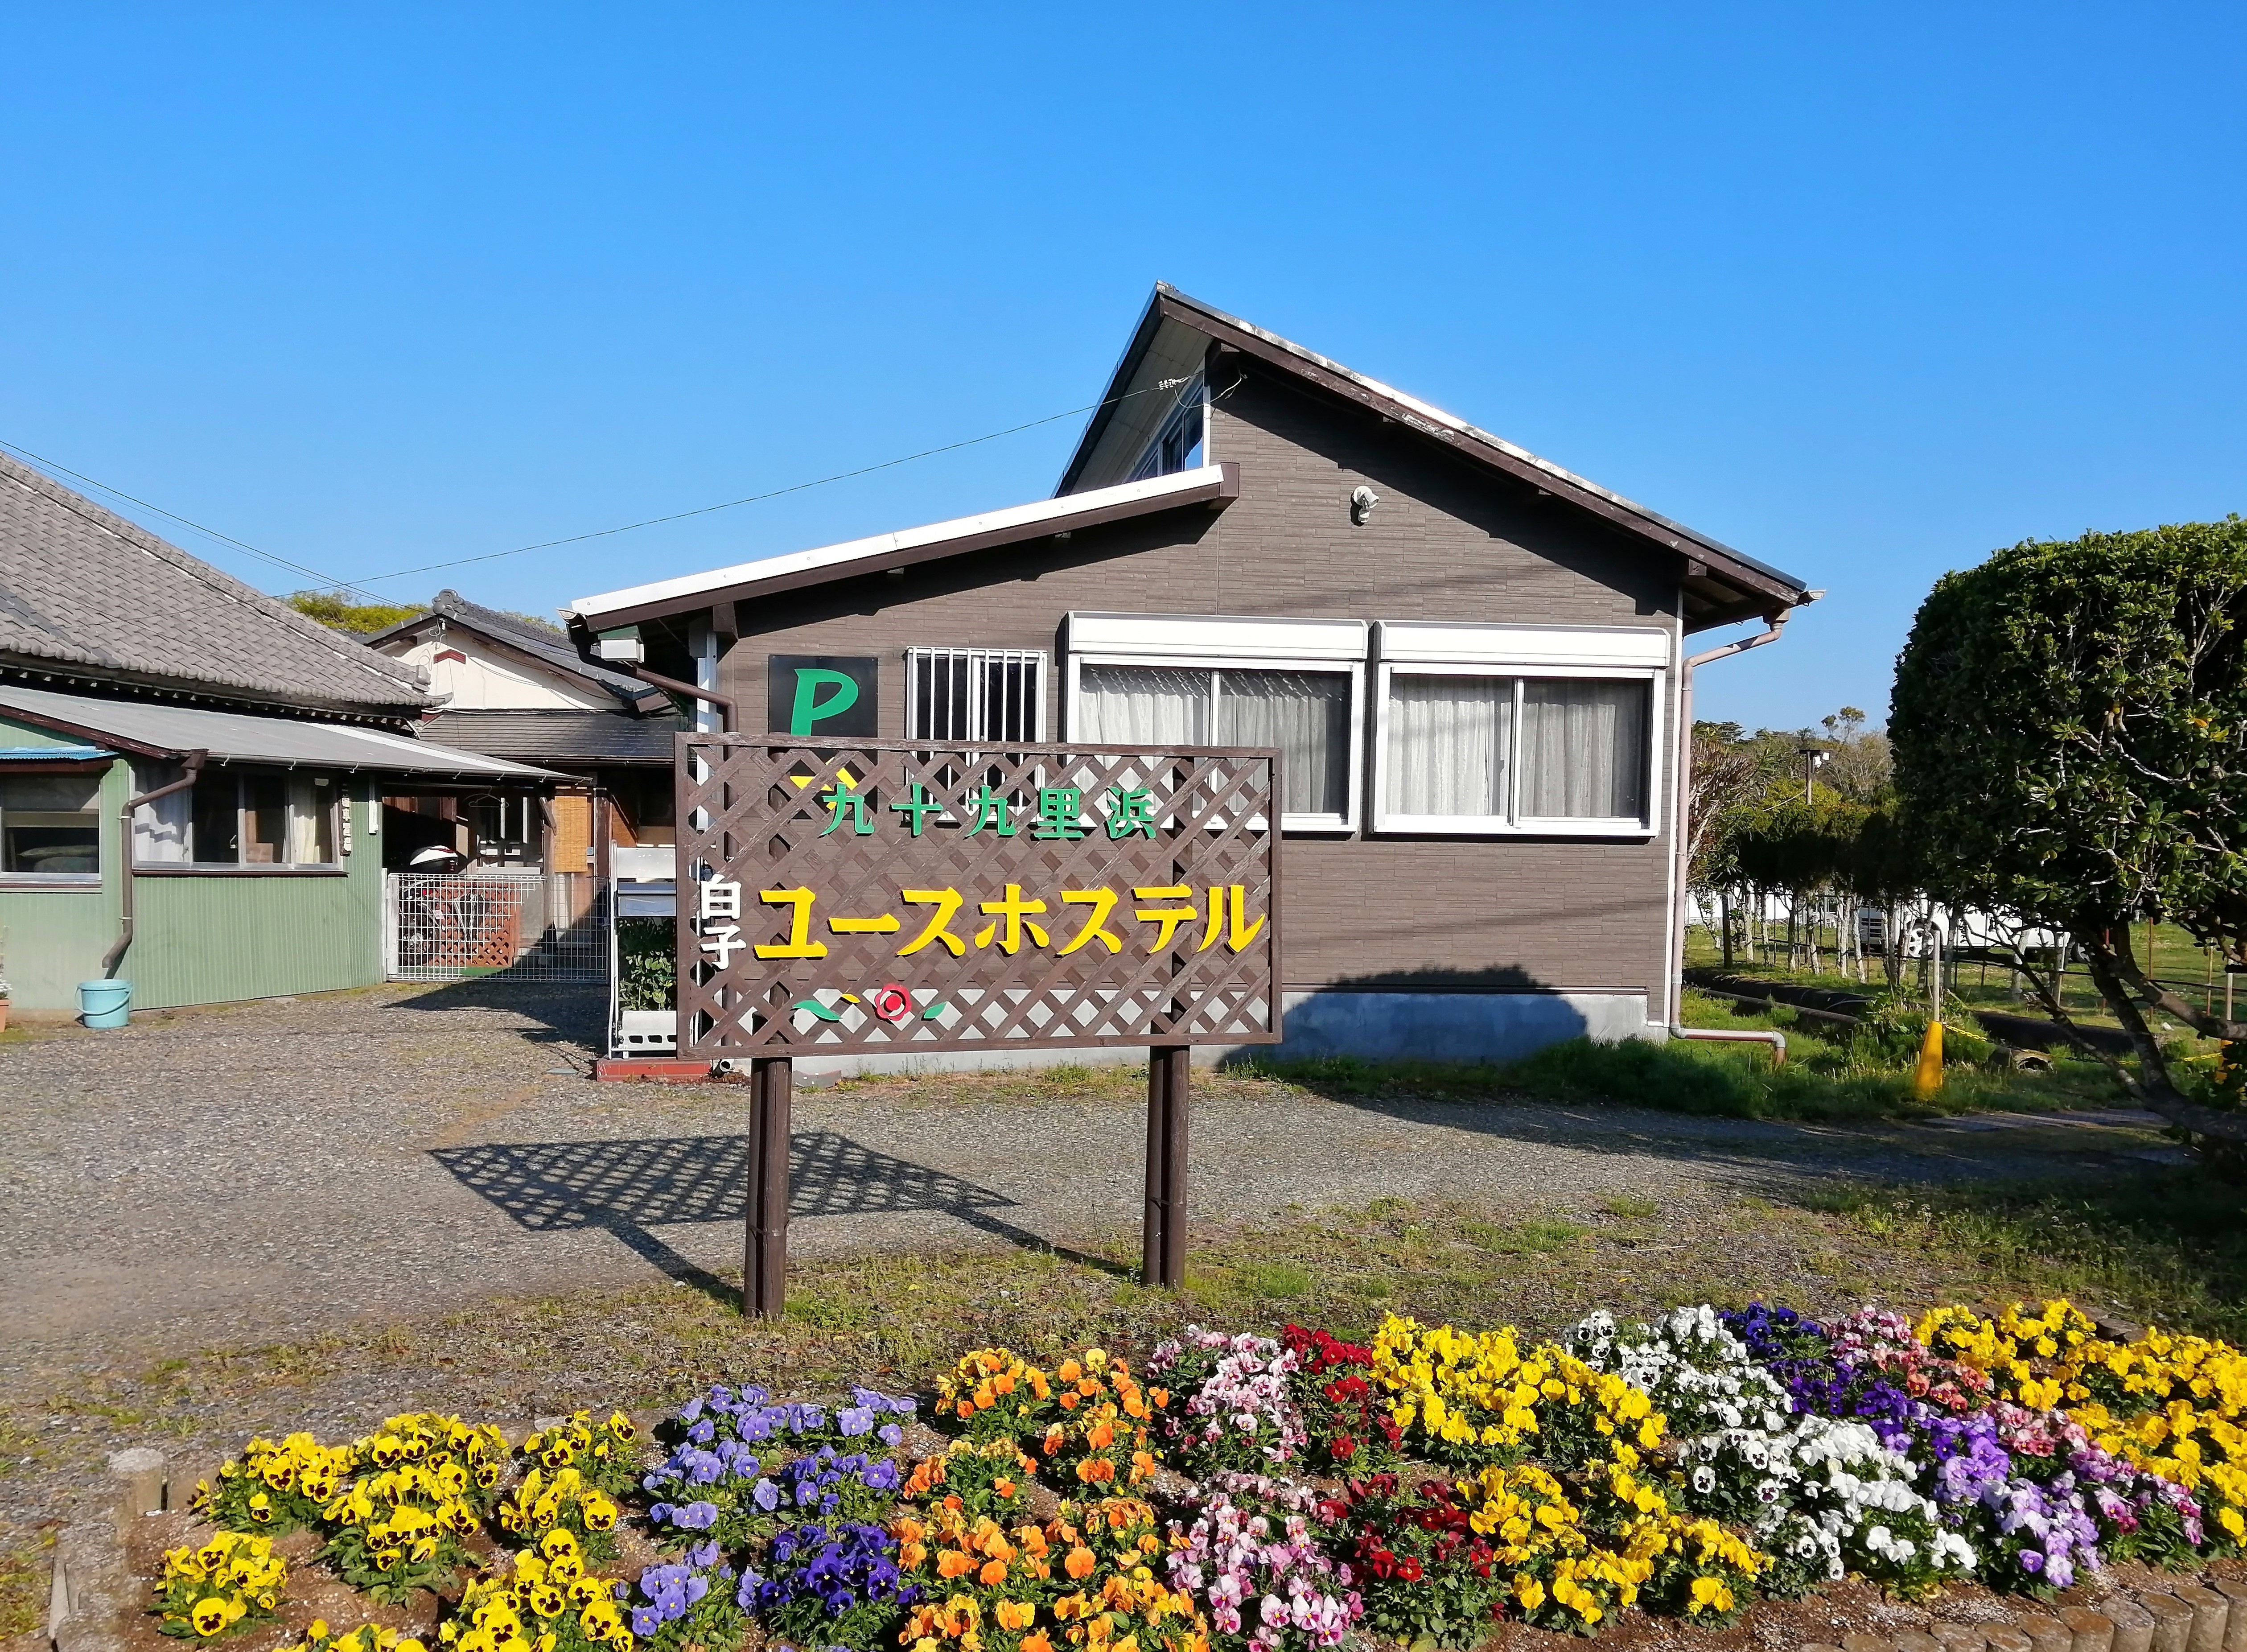 Kujukurihama Shirako Youth Hostel